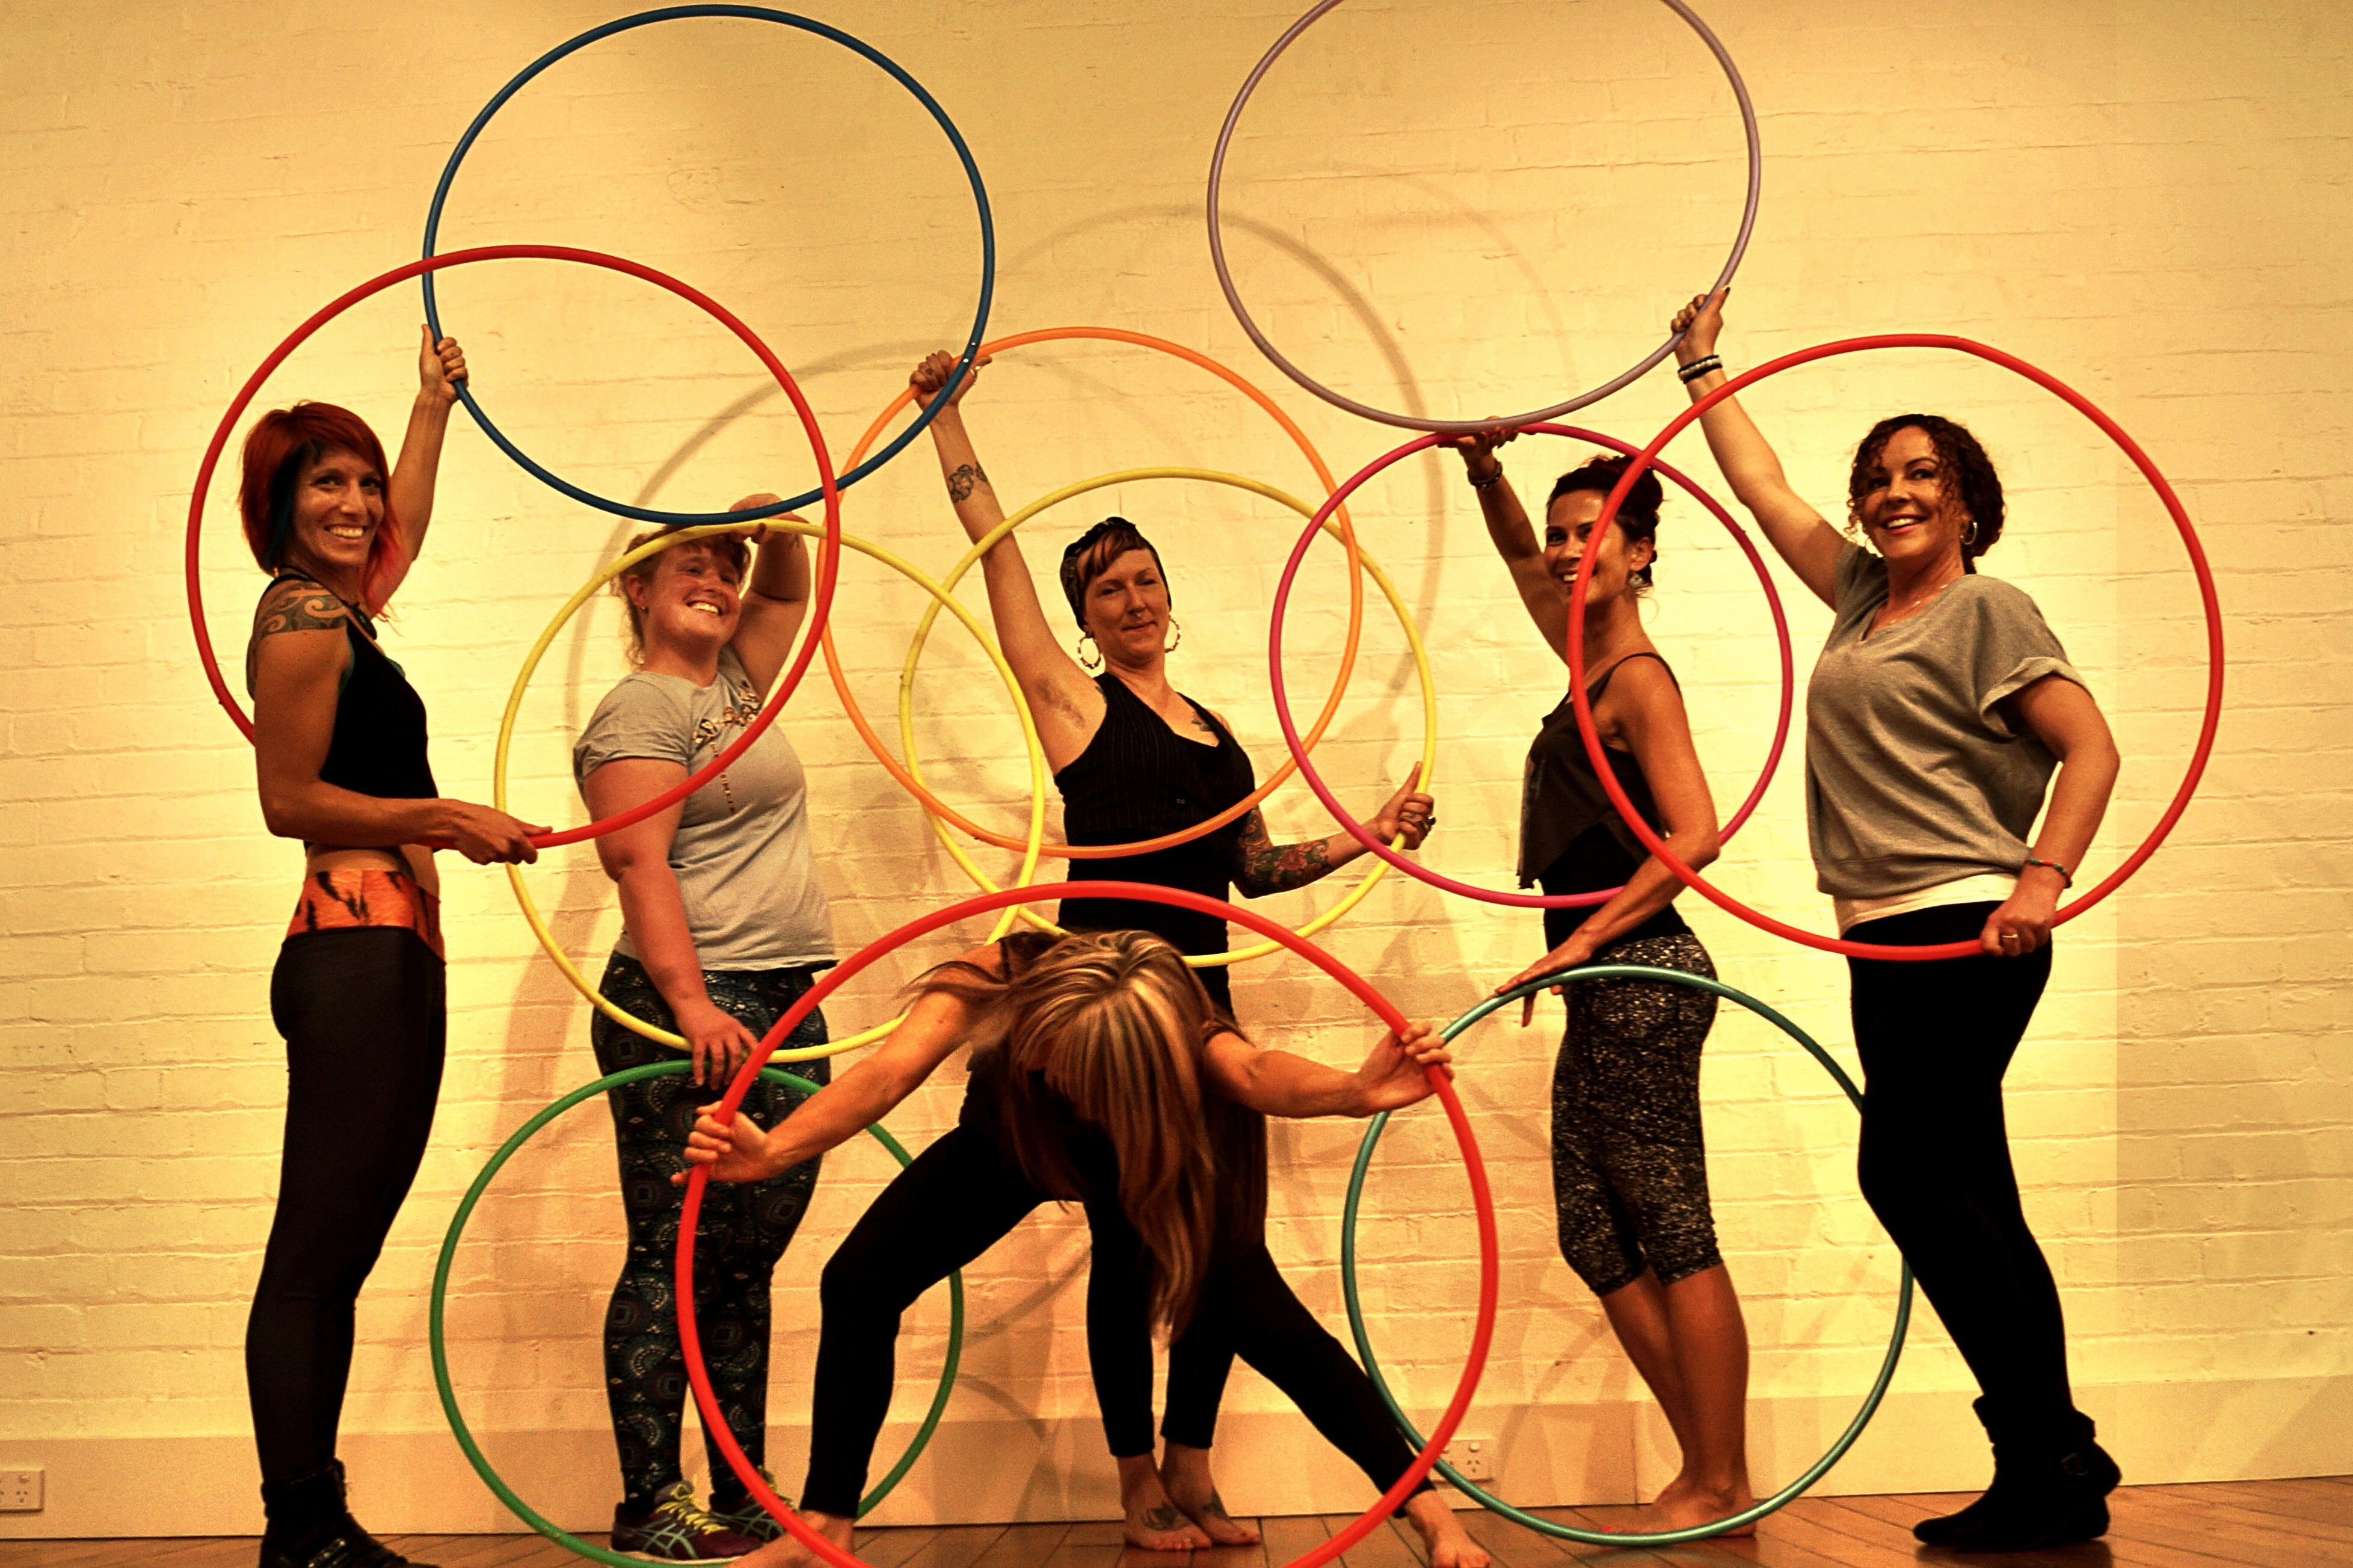 hula hoop lessons